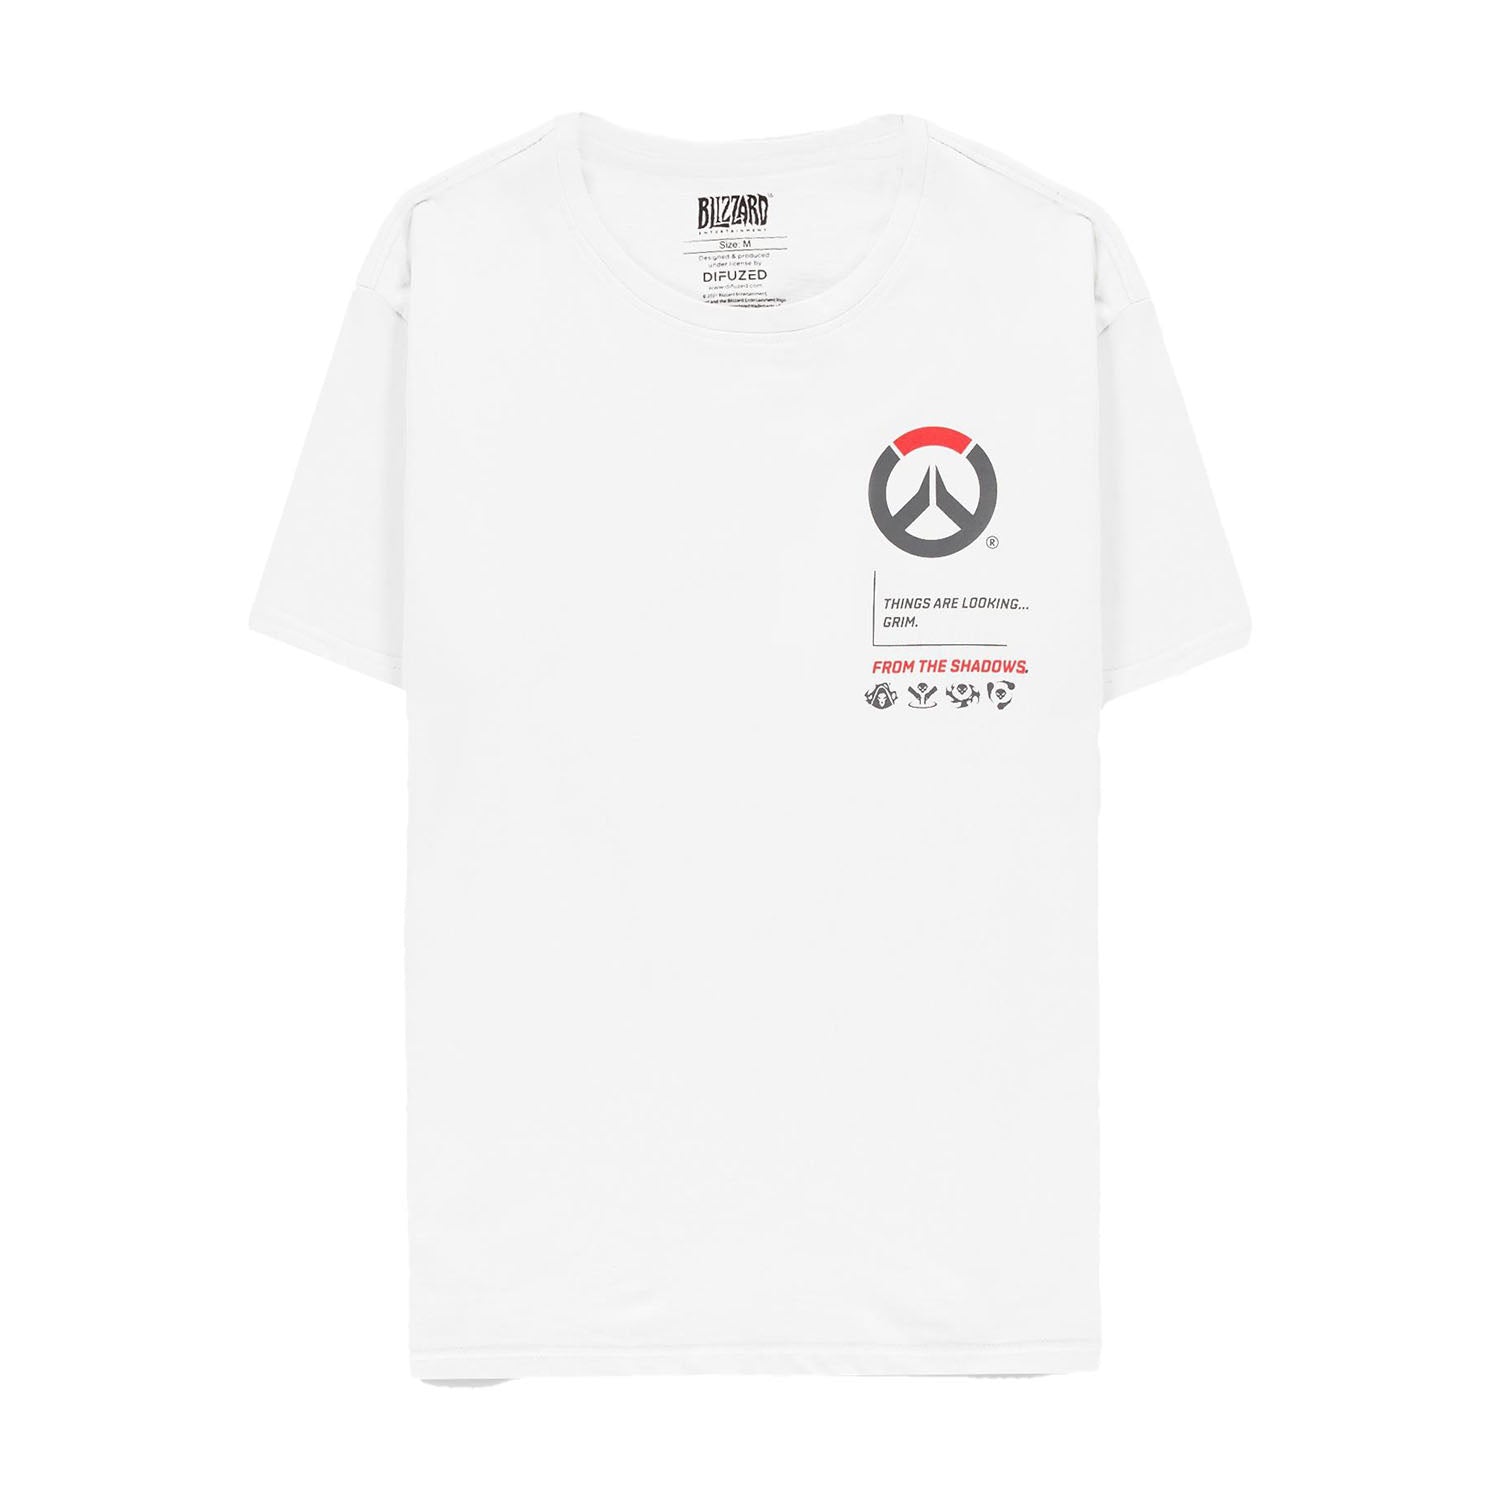 Overwatch Reaper White Guns T-Shirt - Front View